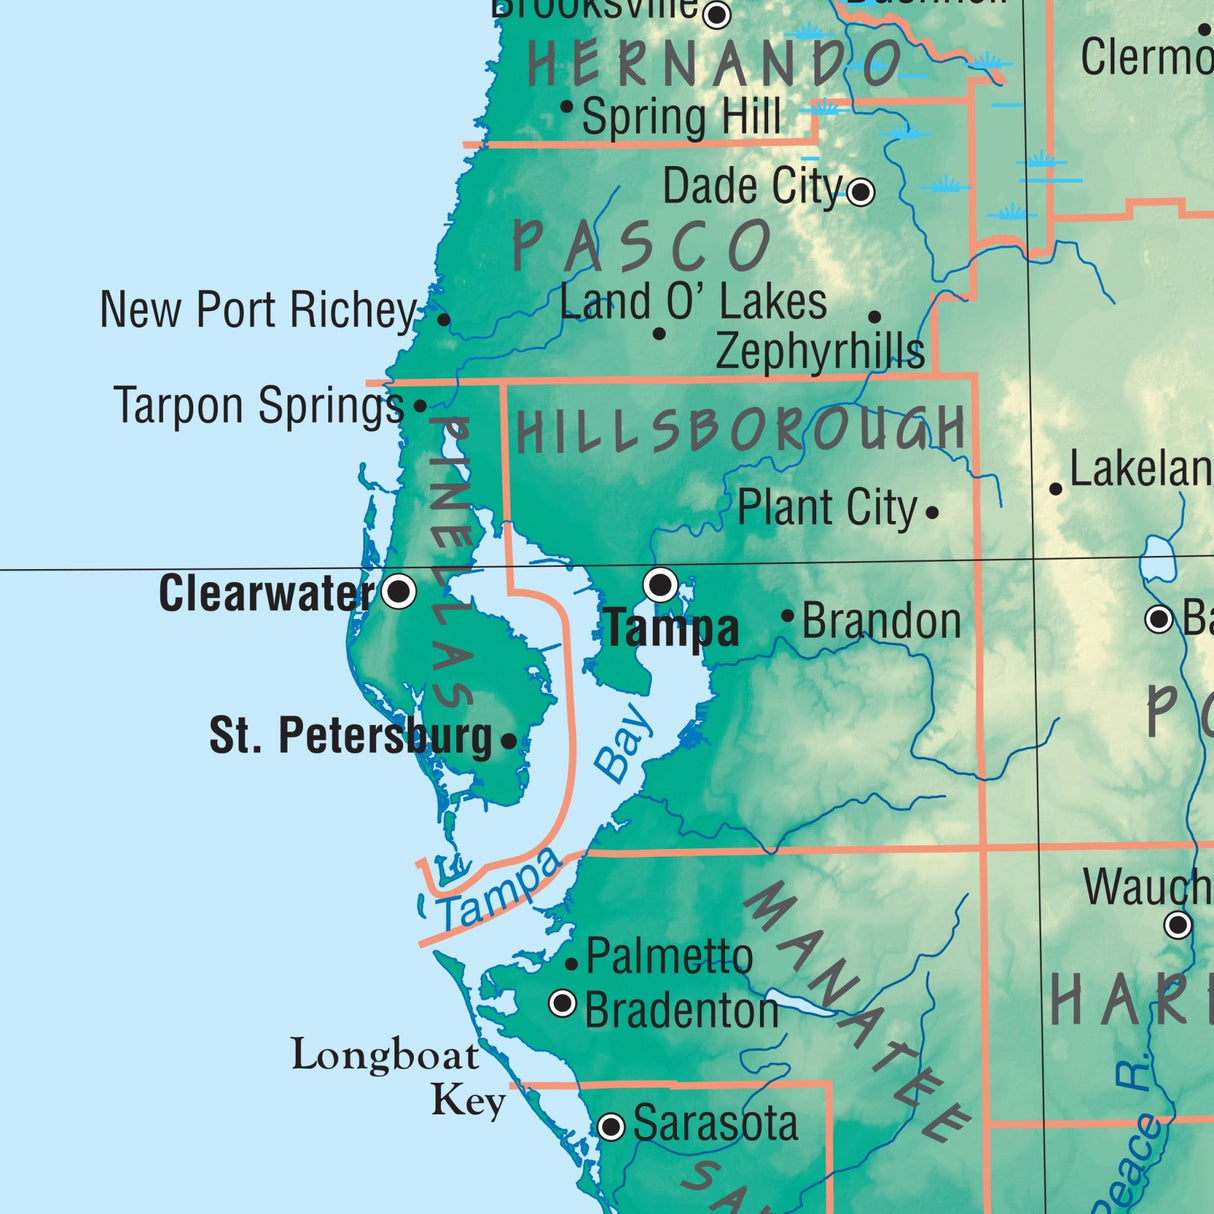 Florida Intermediate Thematic Wall Map - KA-S-FL-INTER-PAPER - Ultimate Globes